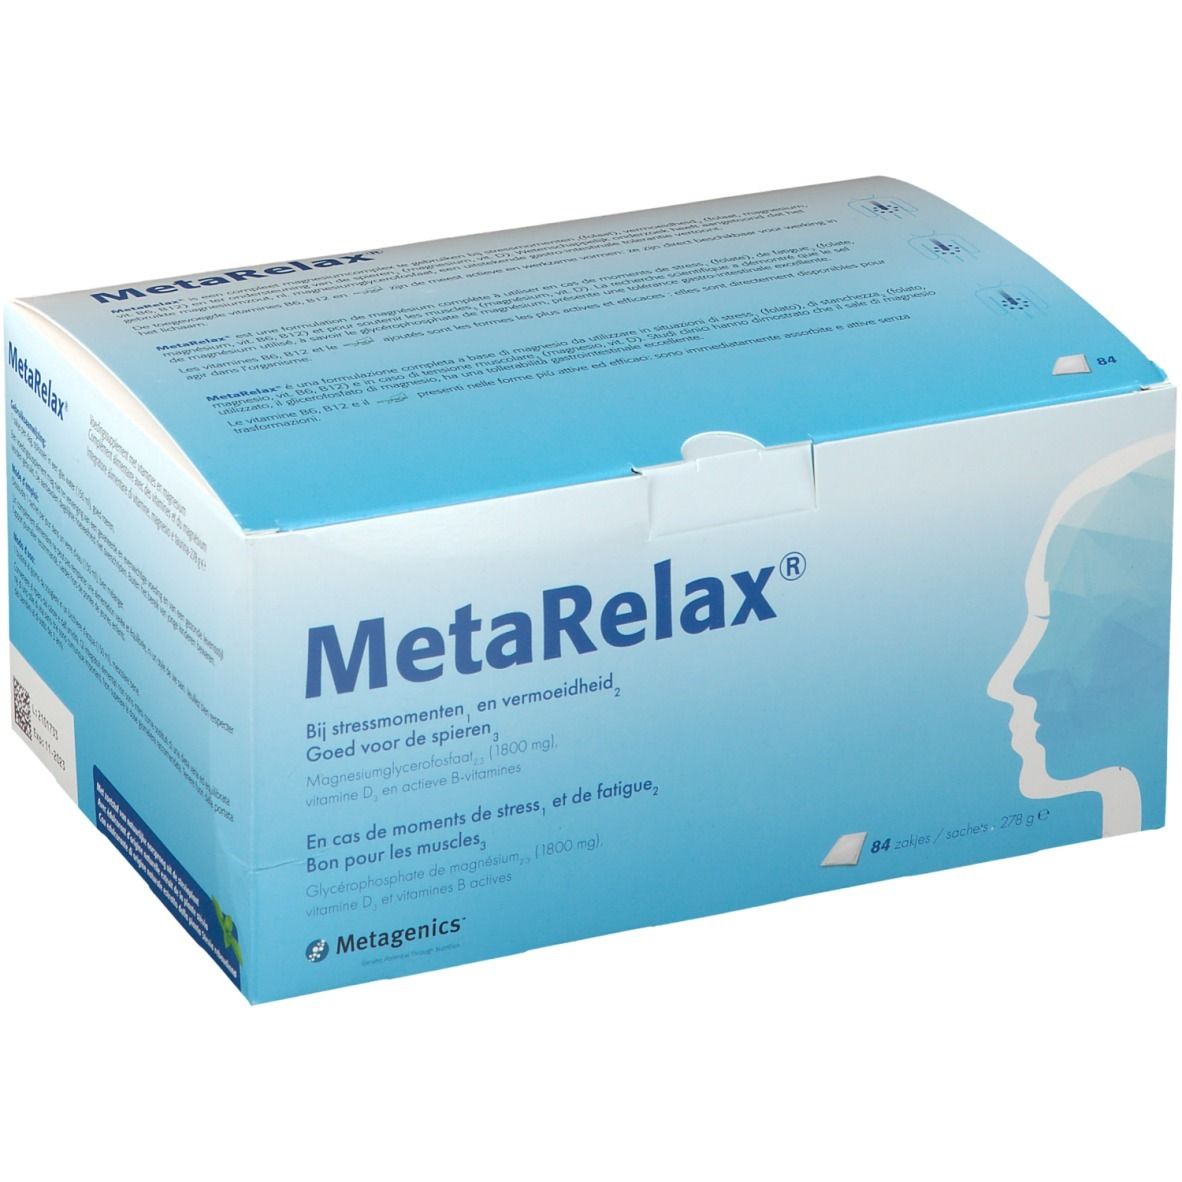 Metagenics™ MetaRelax® Bustine